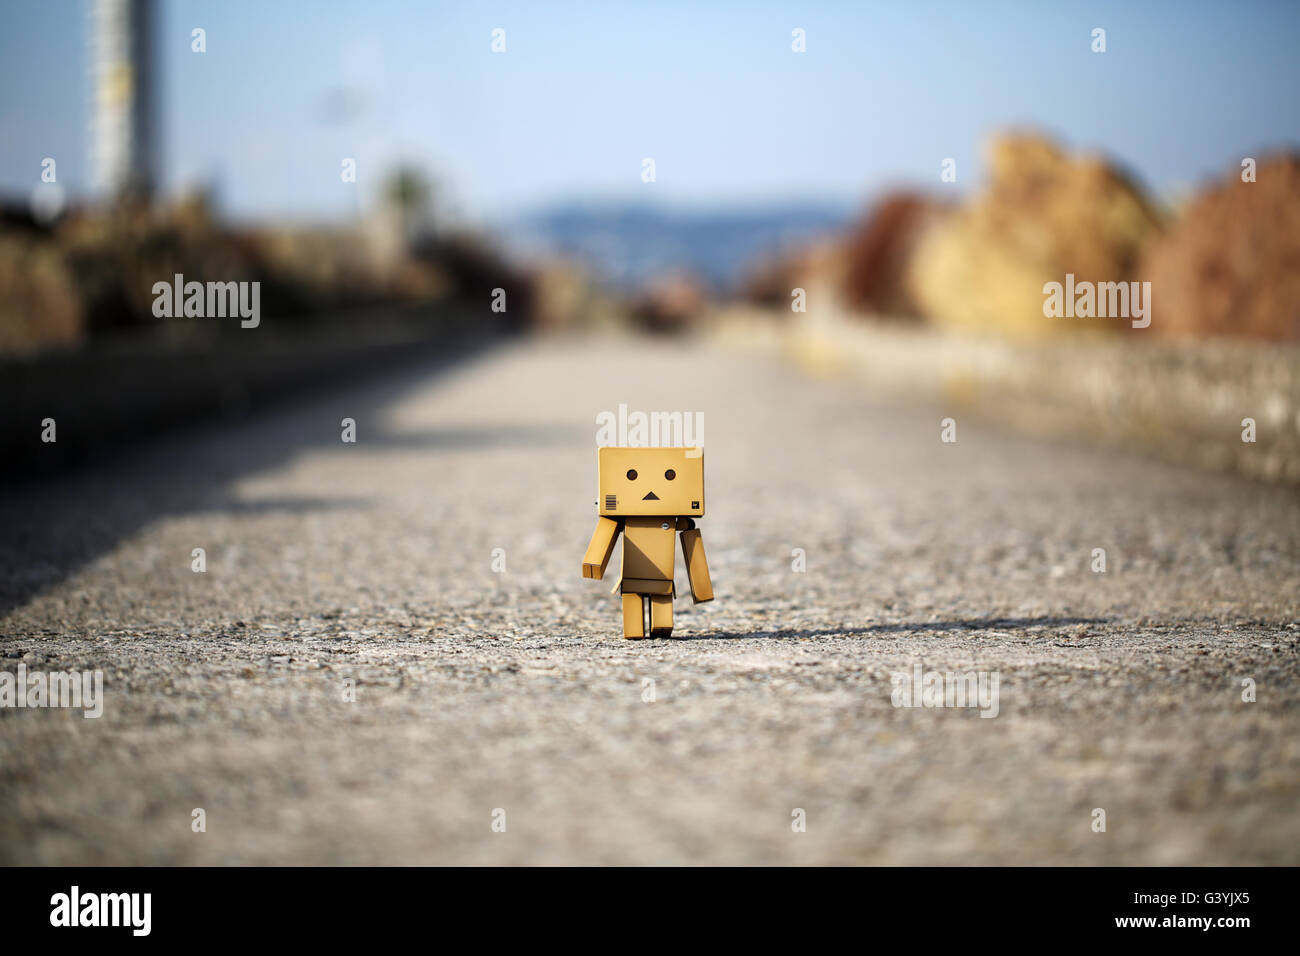 A Danbo Danboard Robot Character walking along a concrete path. is a fictional cardboard box robot character from Kiyohiko Azuma's manga series Stock Photo